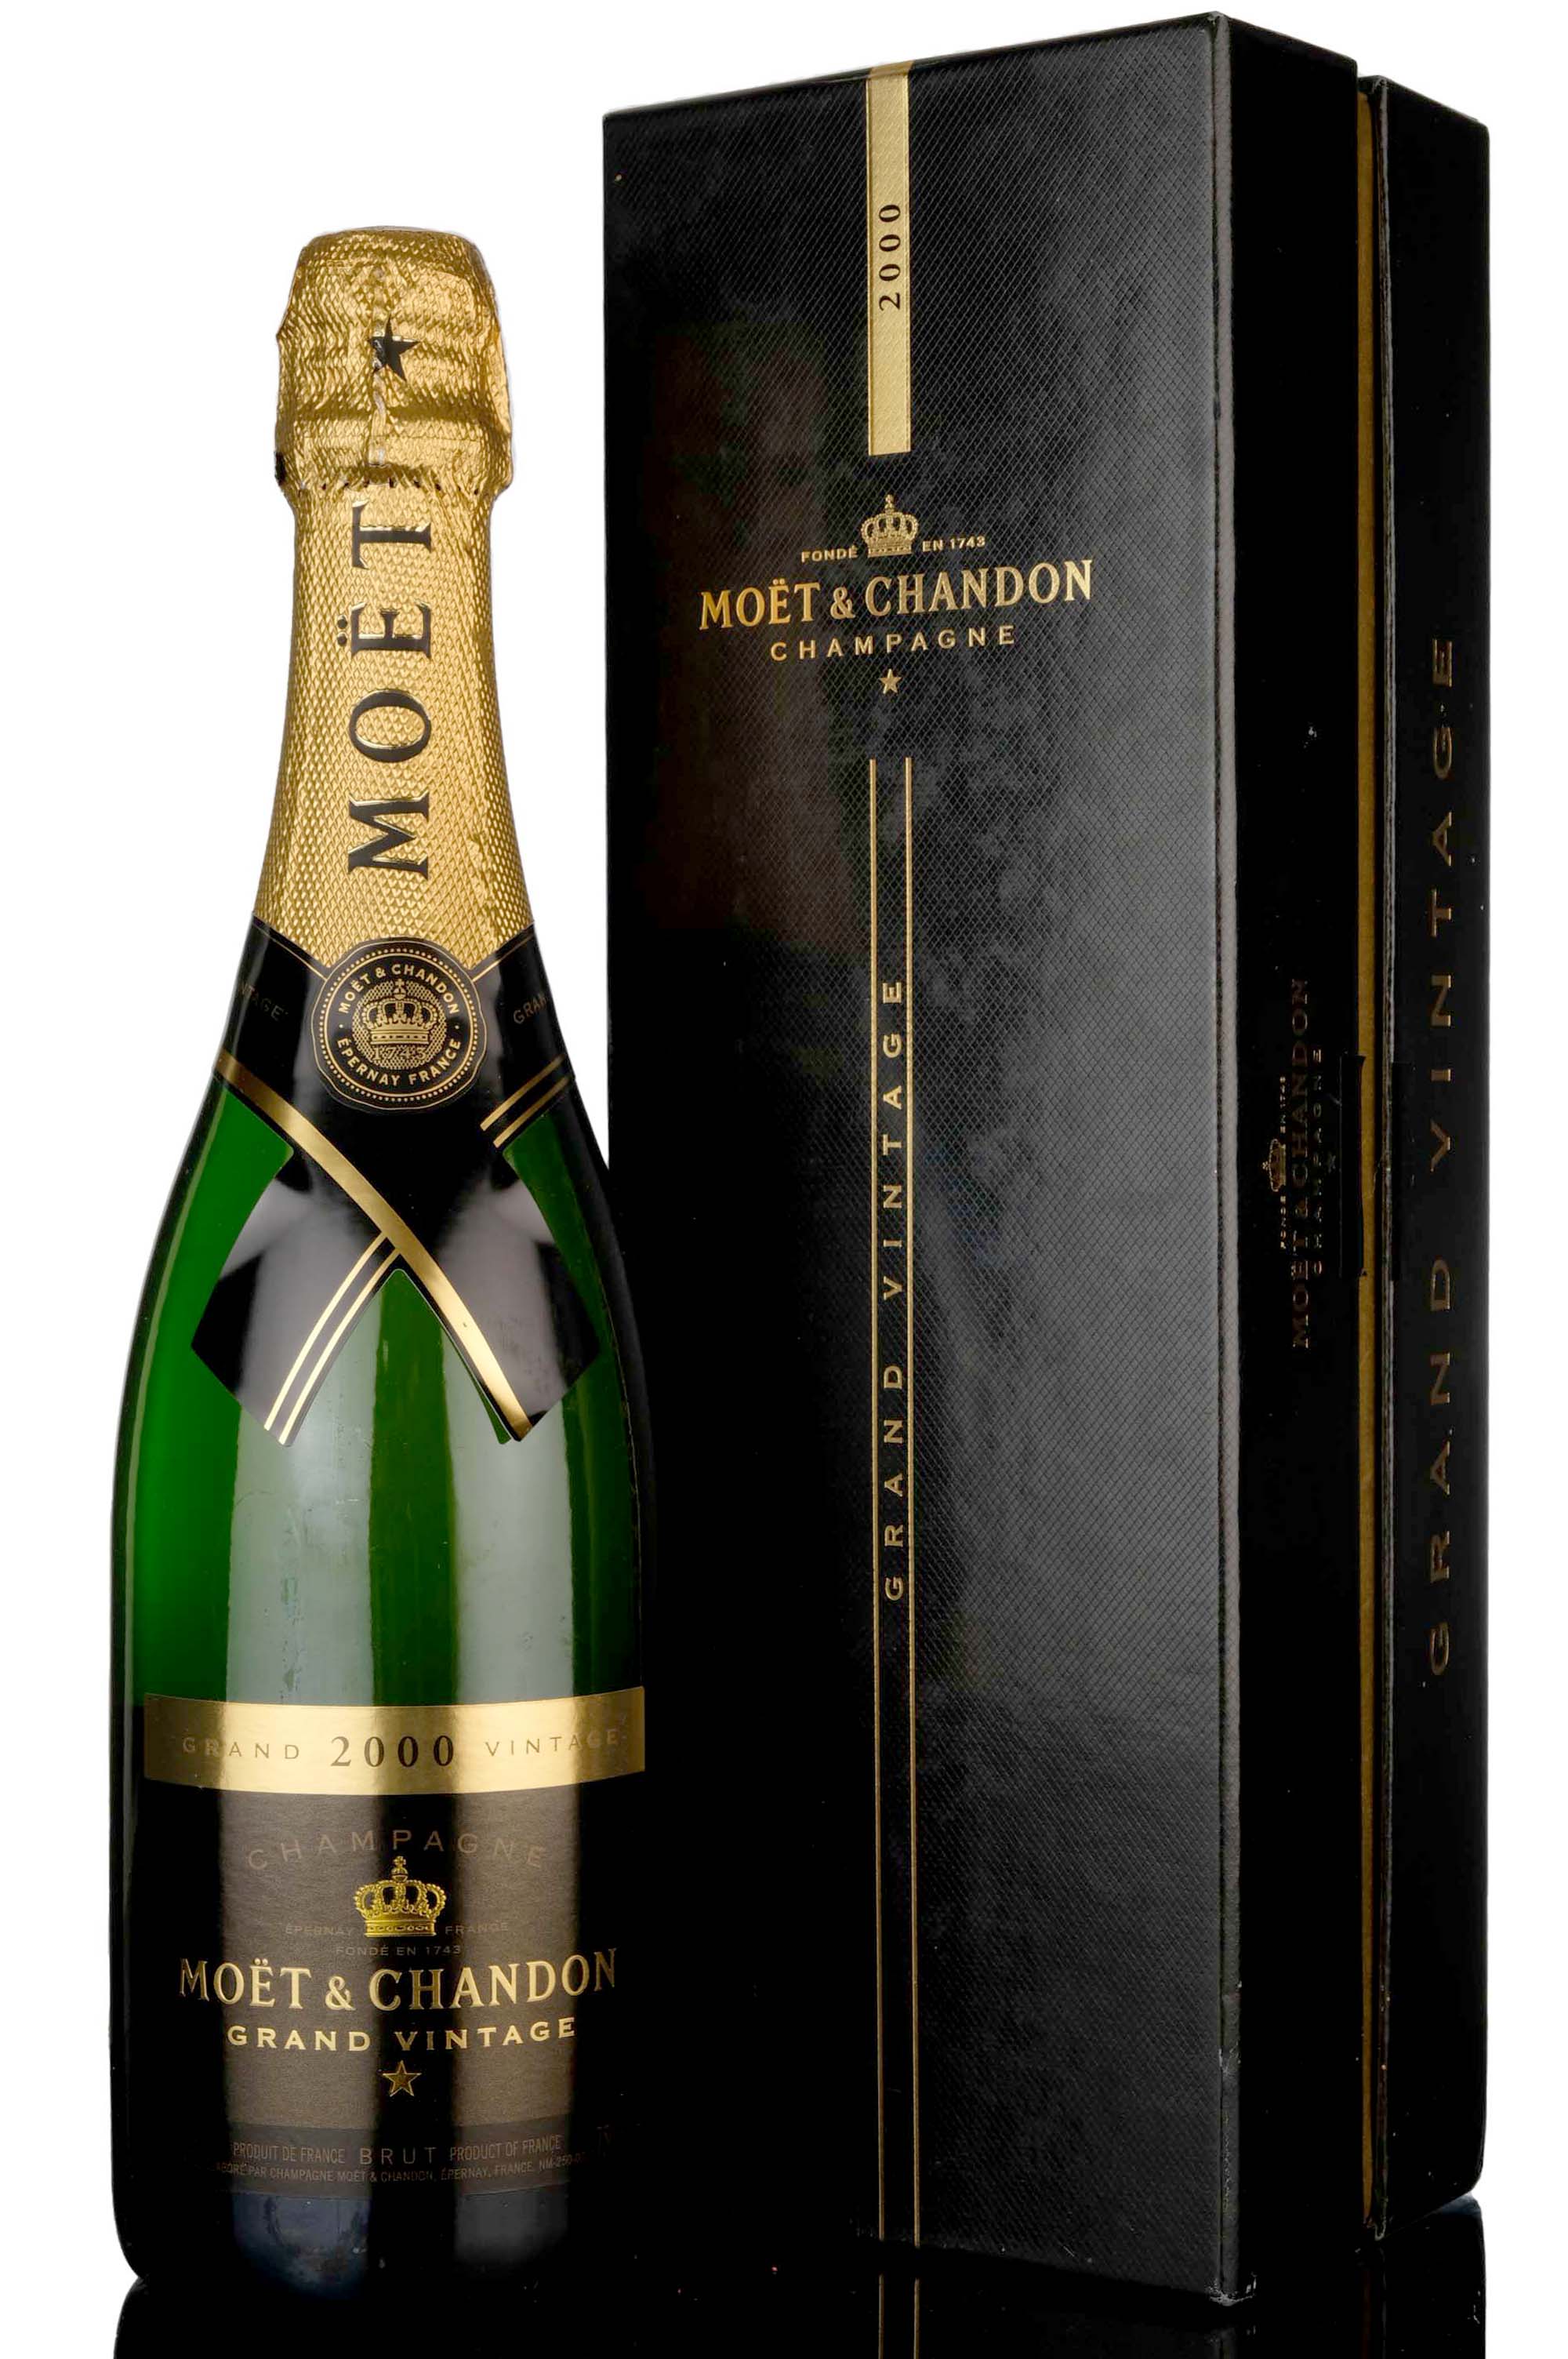 Moet & Chandon 2000 Grand Vintage Champagne